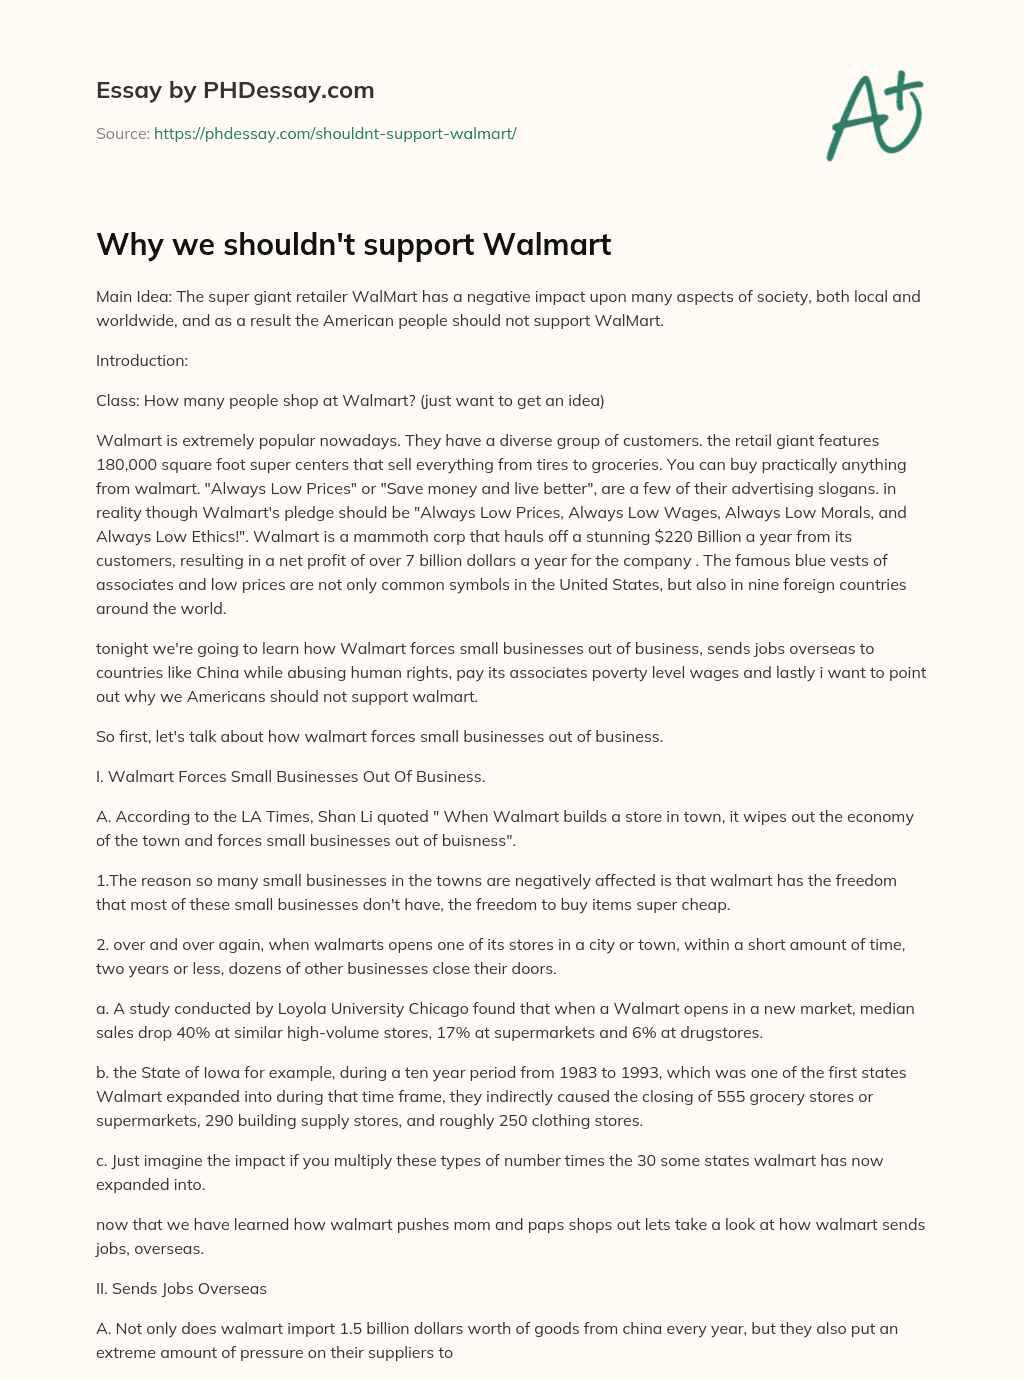 Why we shouldn’t support Walmart essay